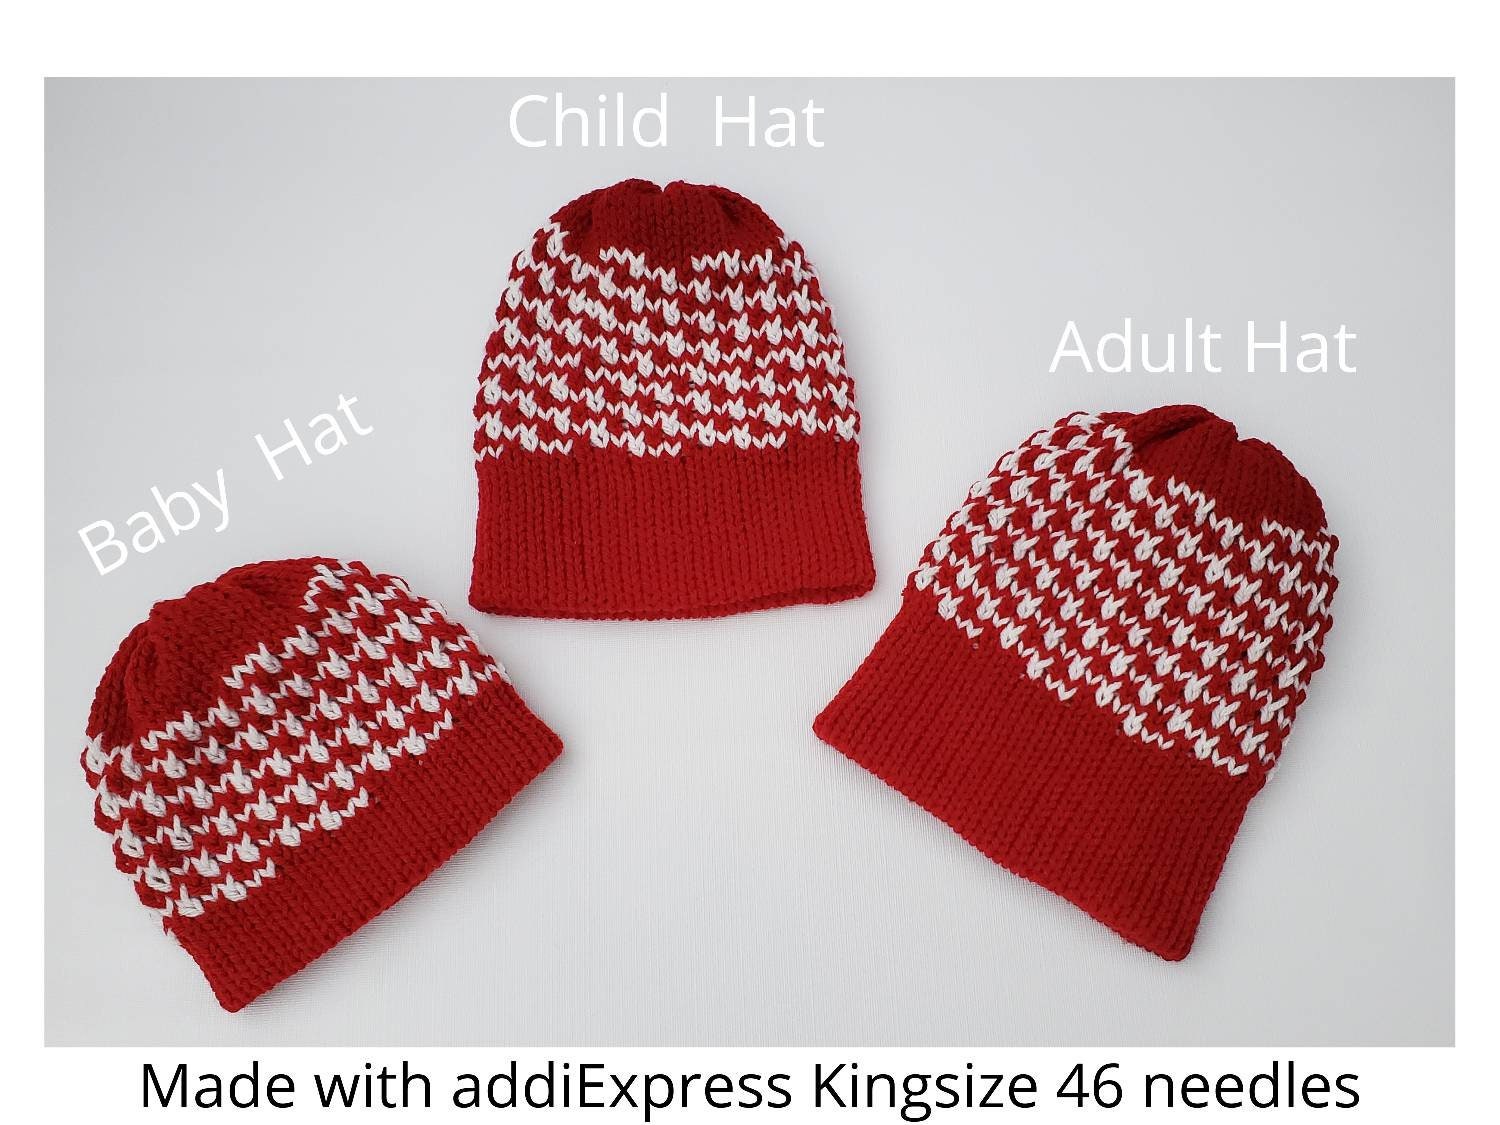 Knitting Machine Sweater Pattern With Icord and Tassel Sentro or Addi  Knitting Tutorial 